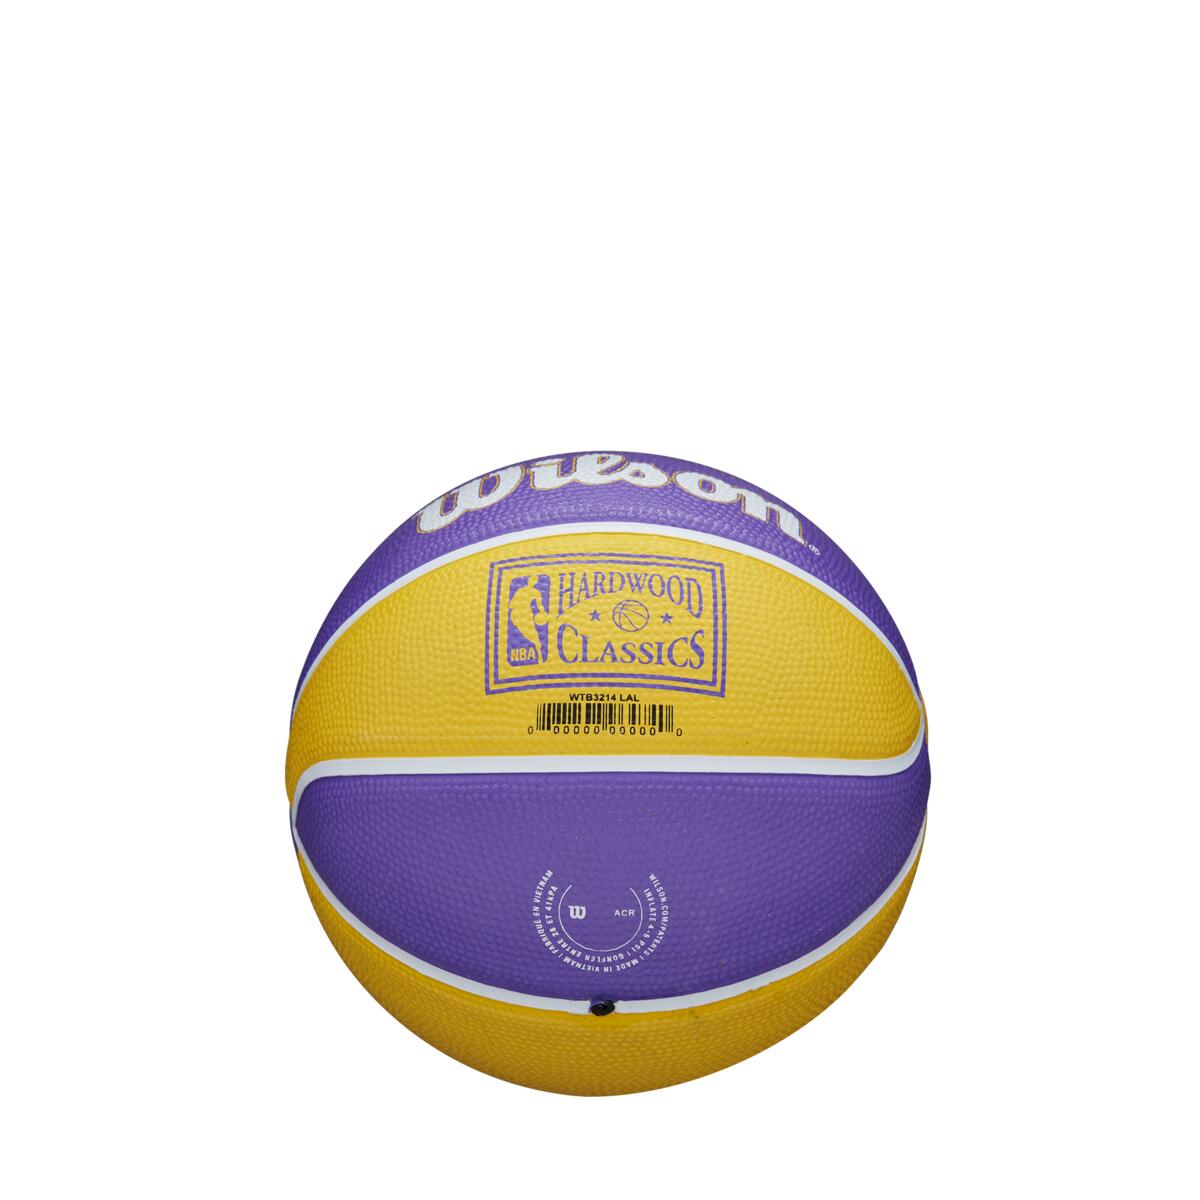 Bola de Basquete NBA Team Retro Mini - Los Angeles Lakers